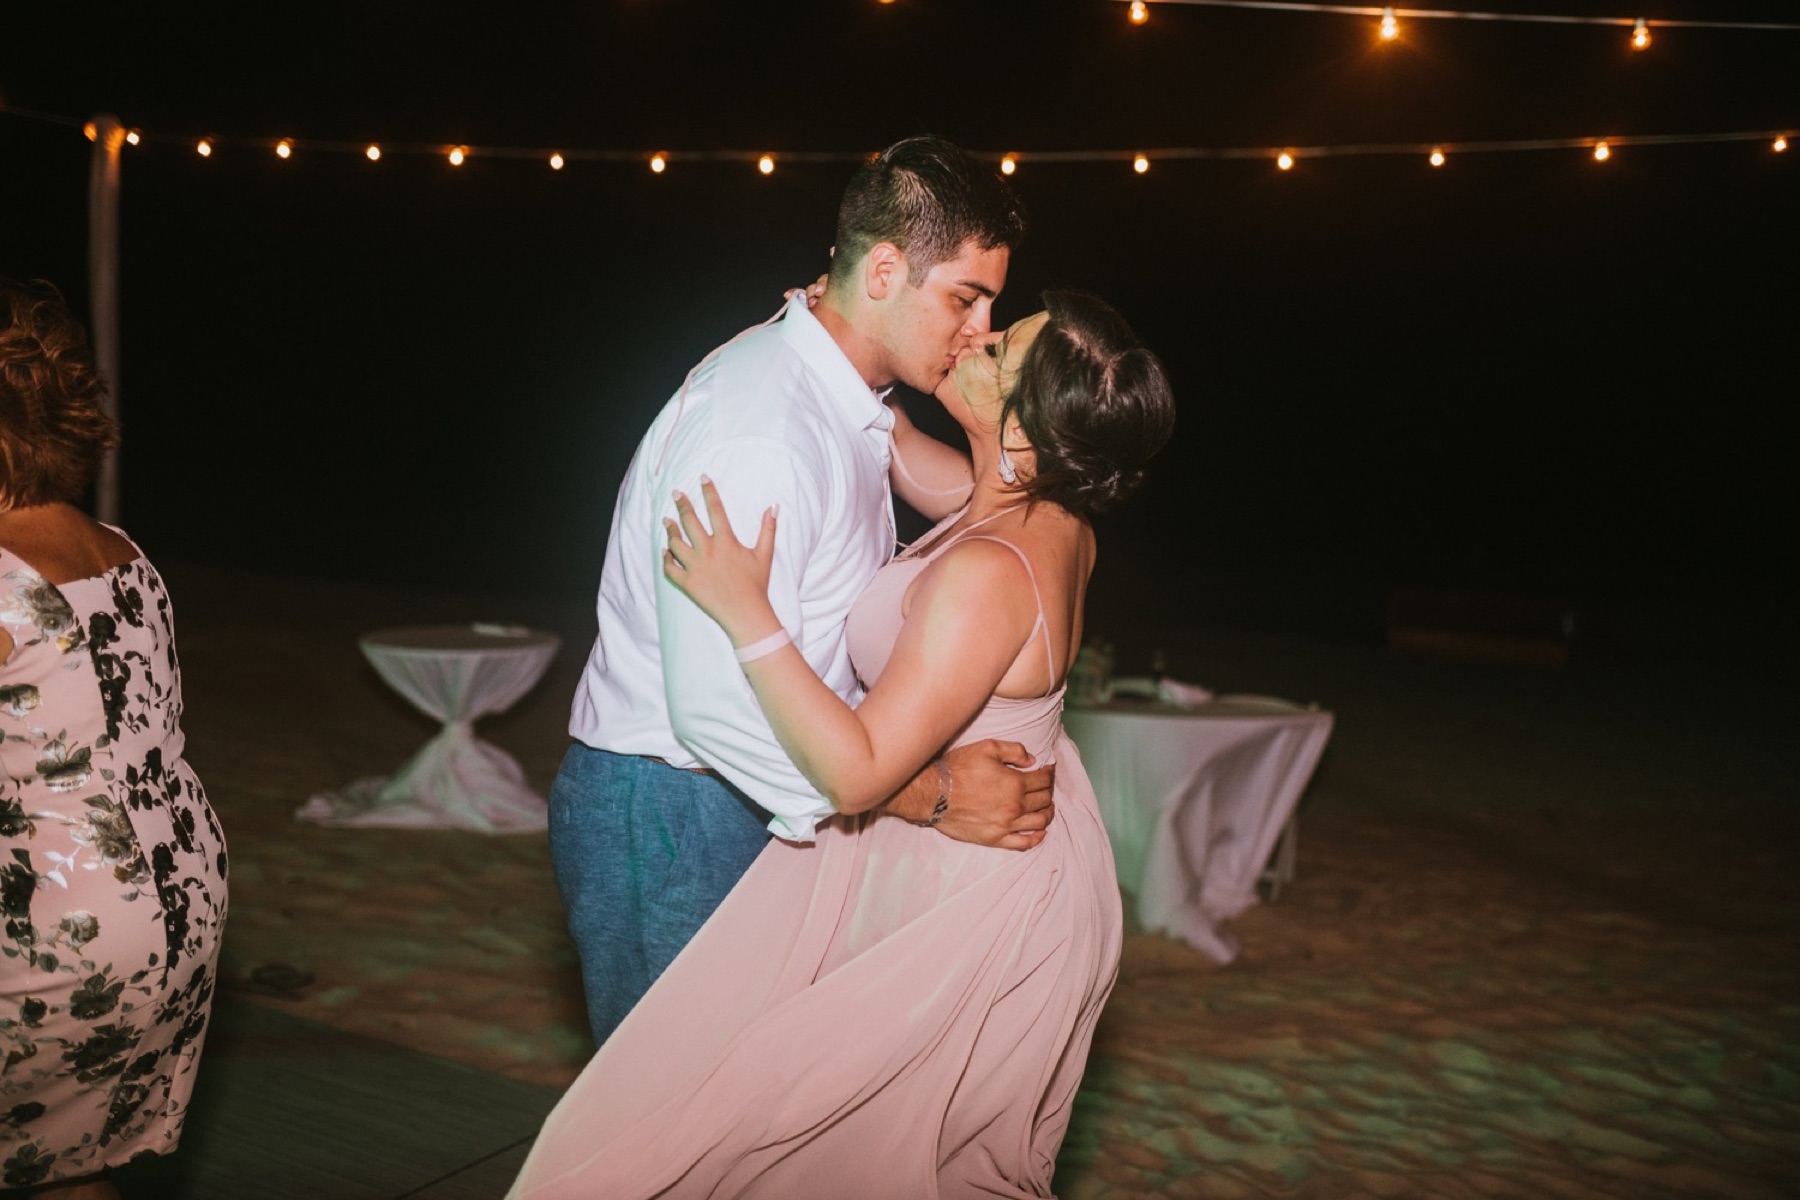 Maid of honor and husband kissing while dancing at wedding